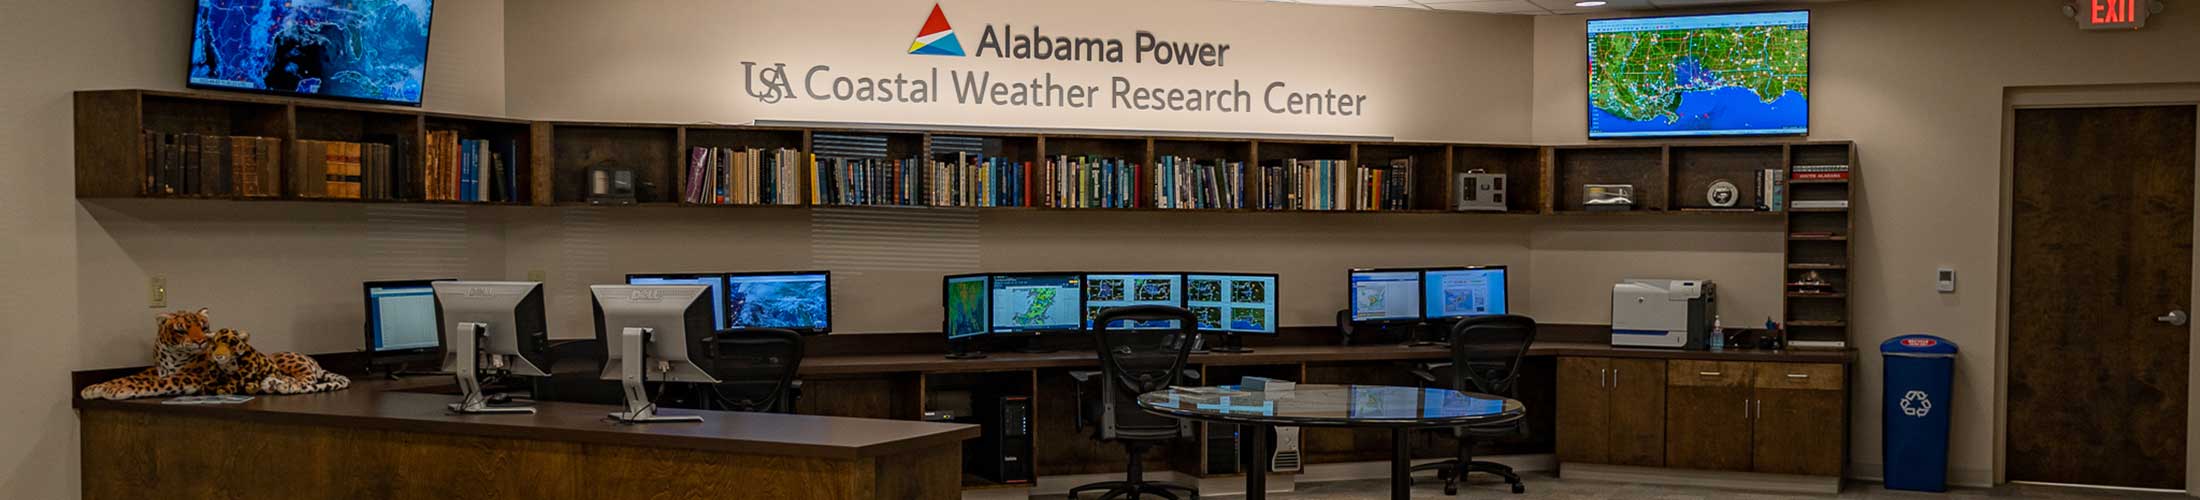 Alabama Power-USA Coastal Weather Research Center office displaying monitors.